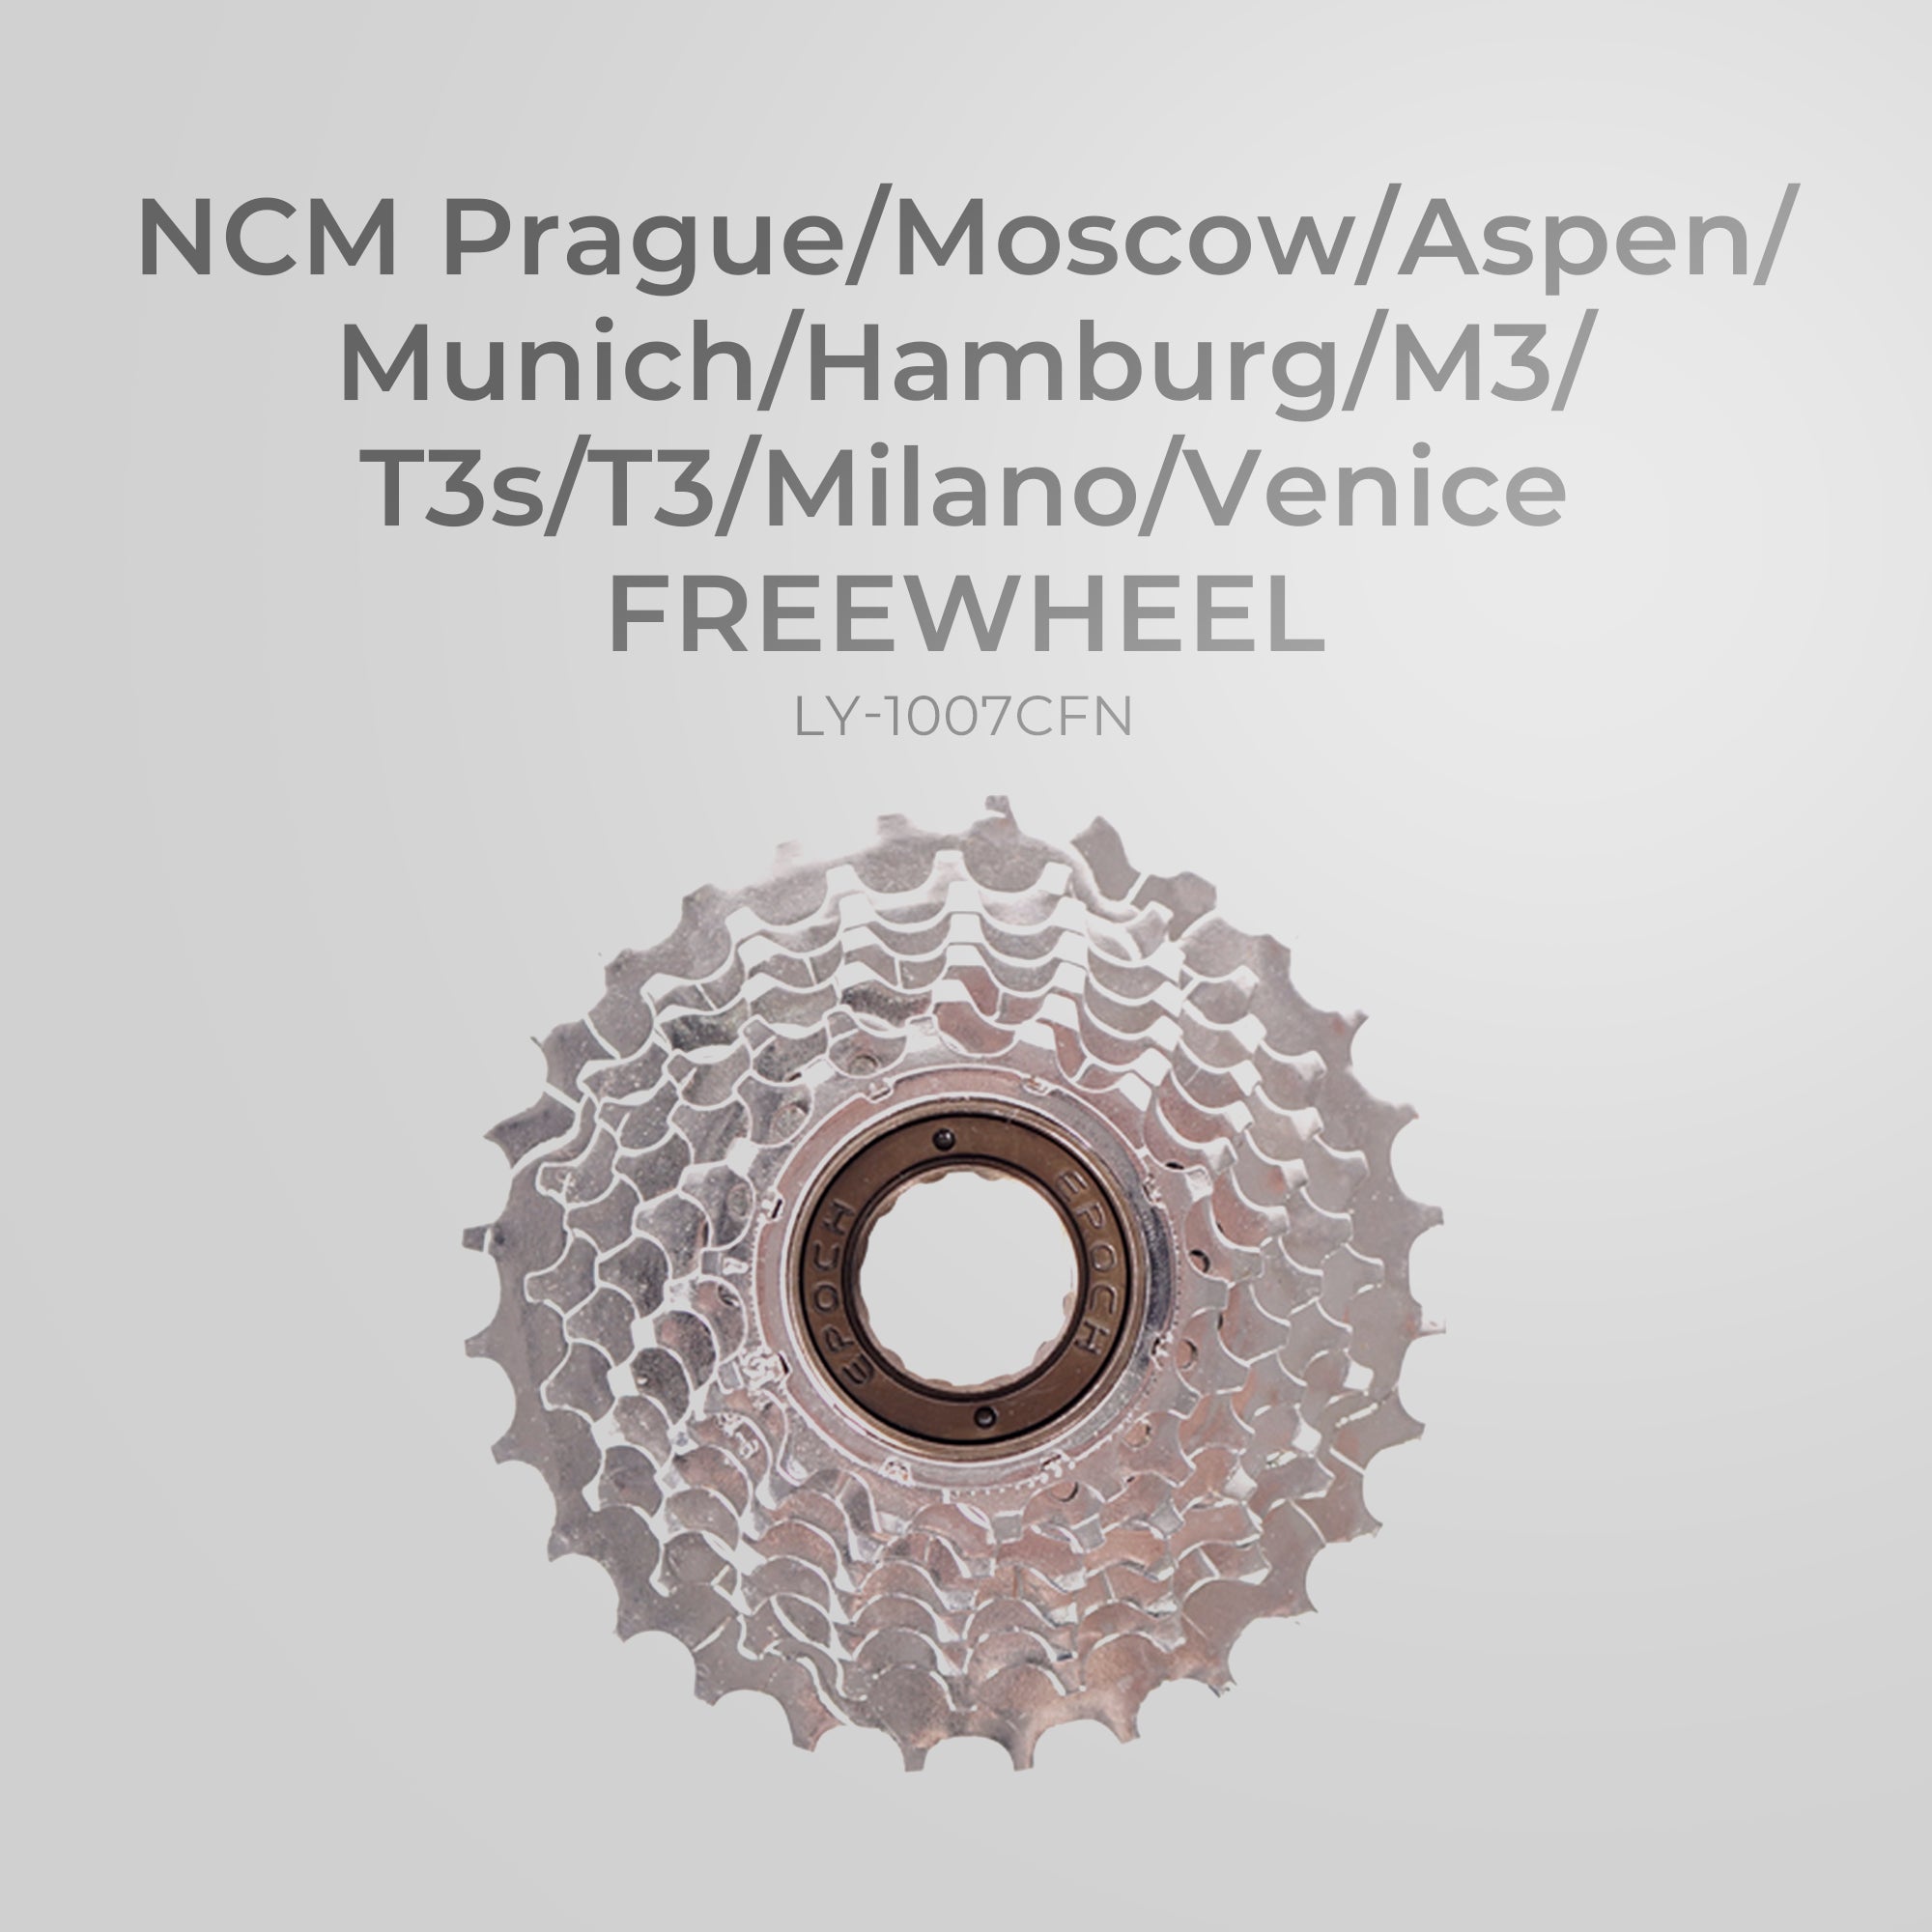 NCM Prague/Moscow/Aspen/Munich/Hamburg/M3/T3s/T3/Milano/Venice Freewheel - LY-1007CFN